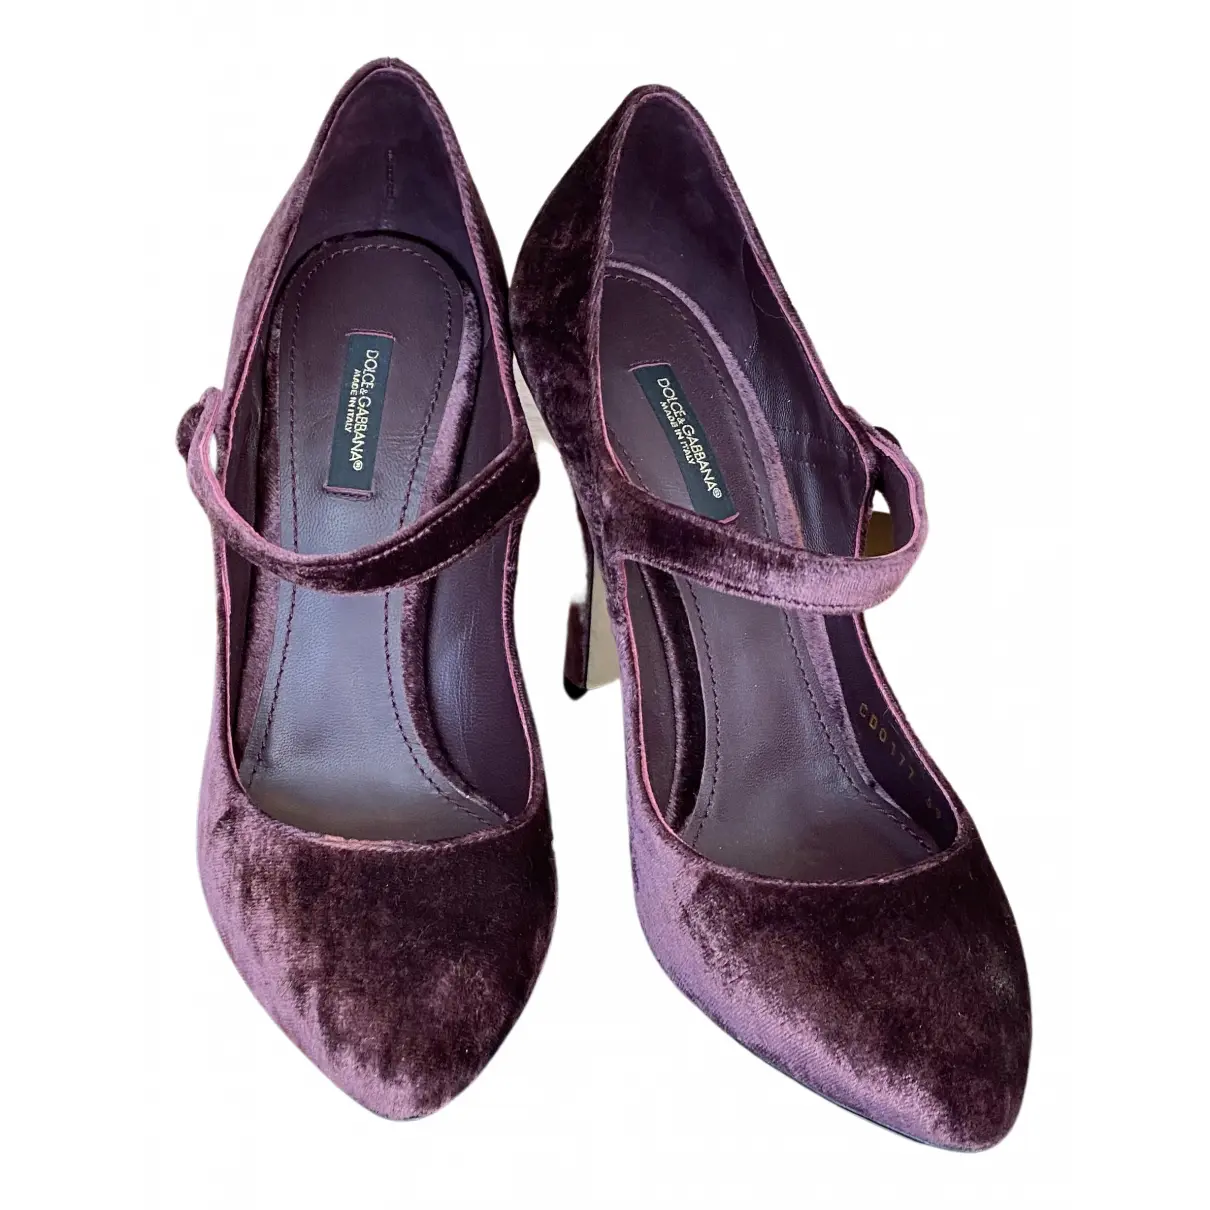 Cloth heels Dolce & Gabbana